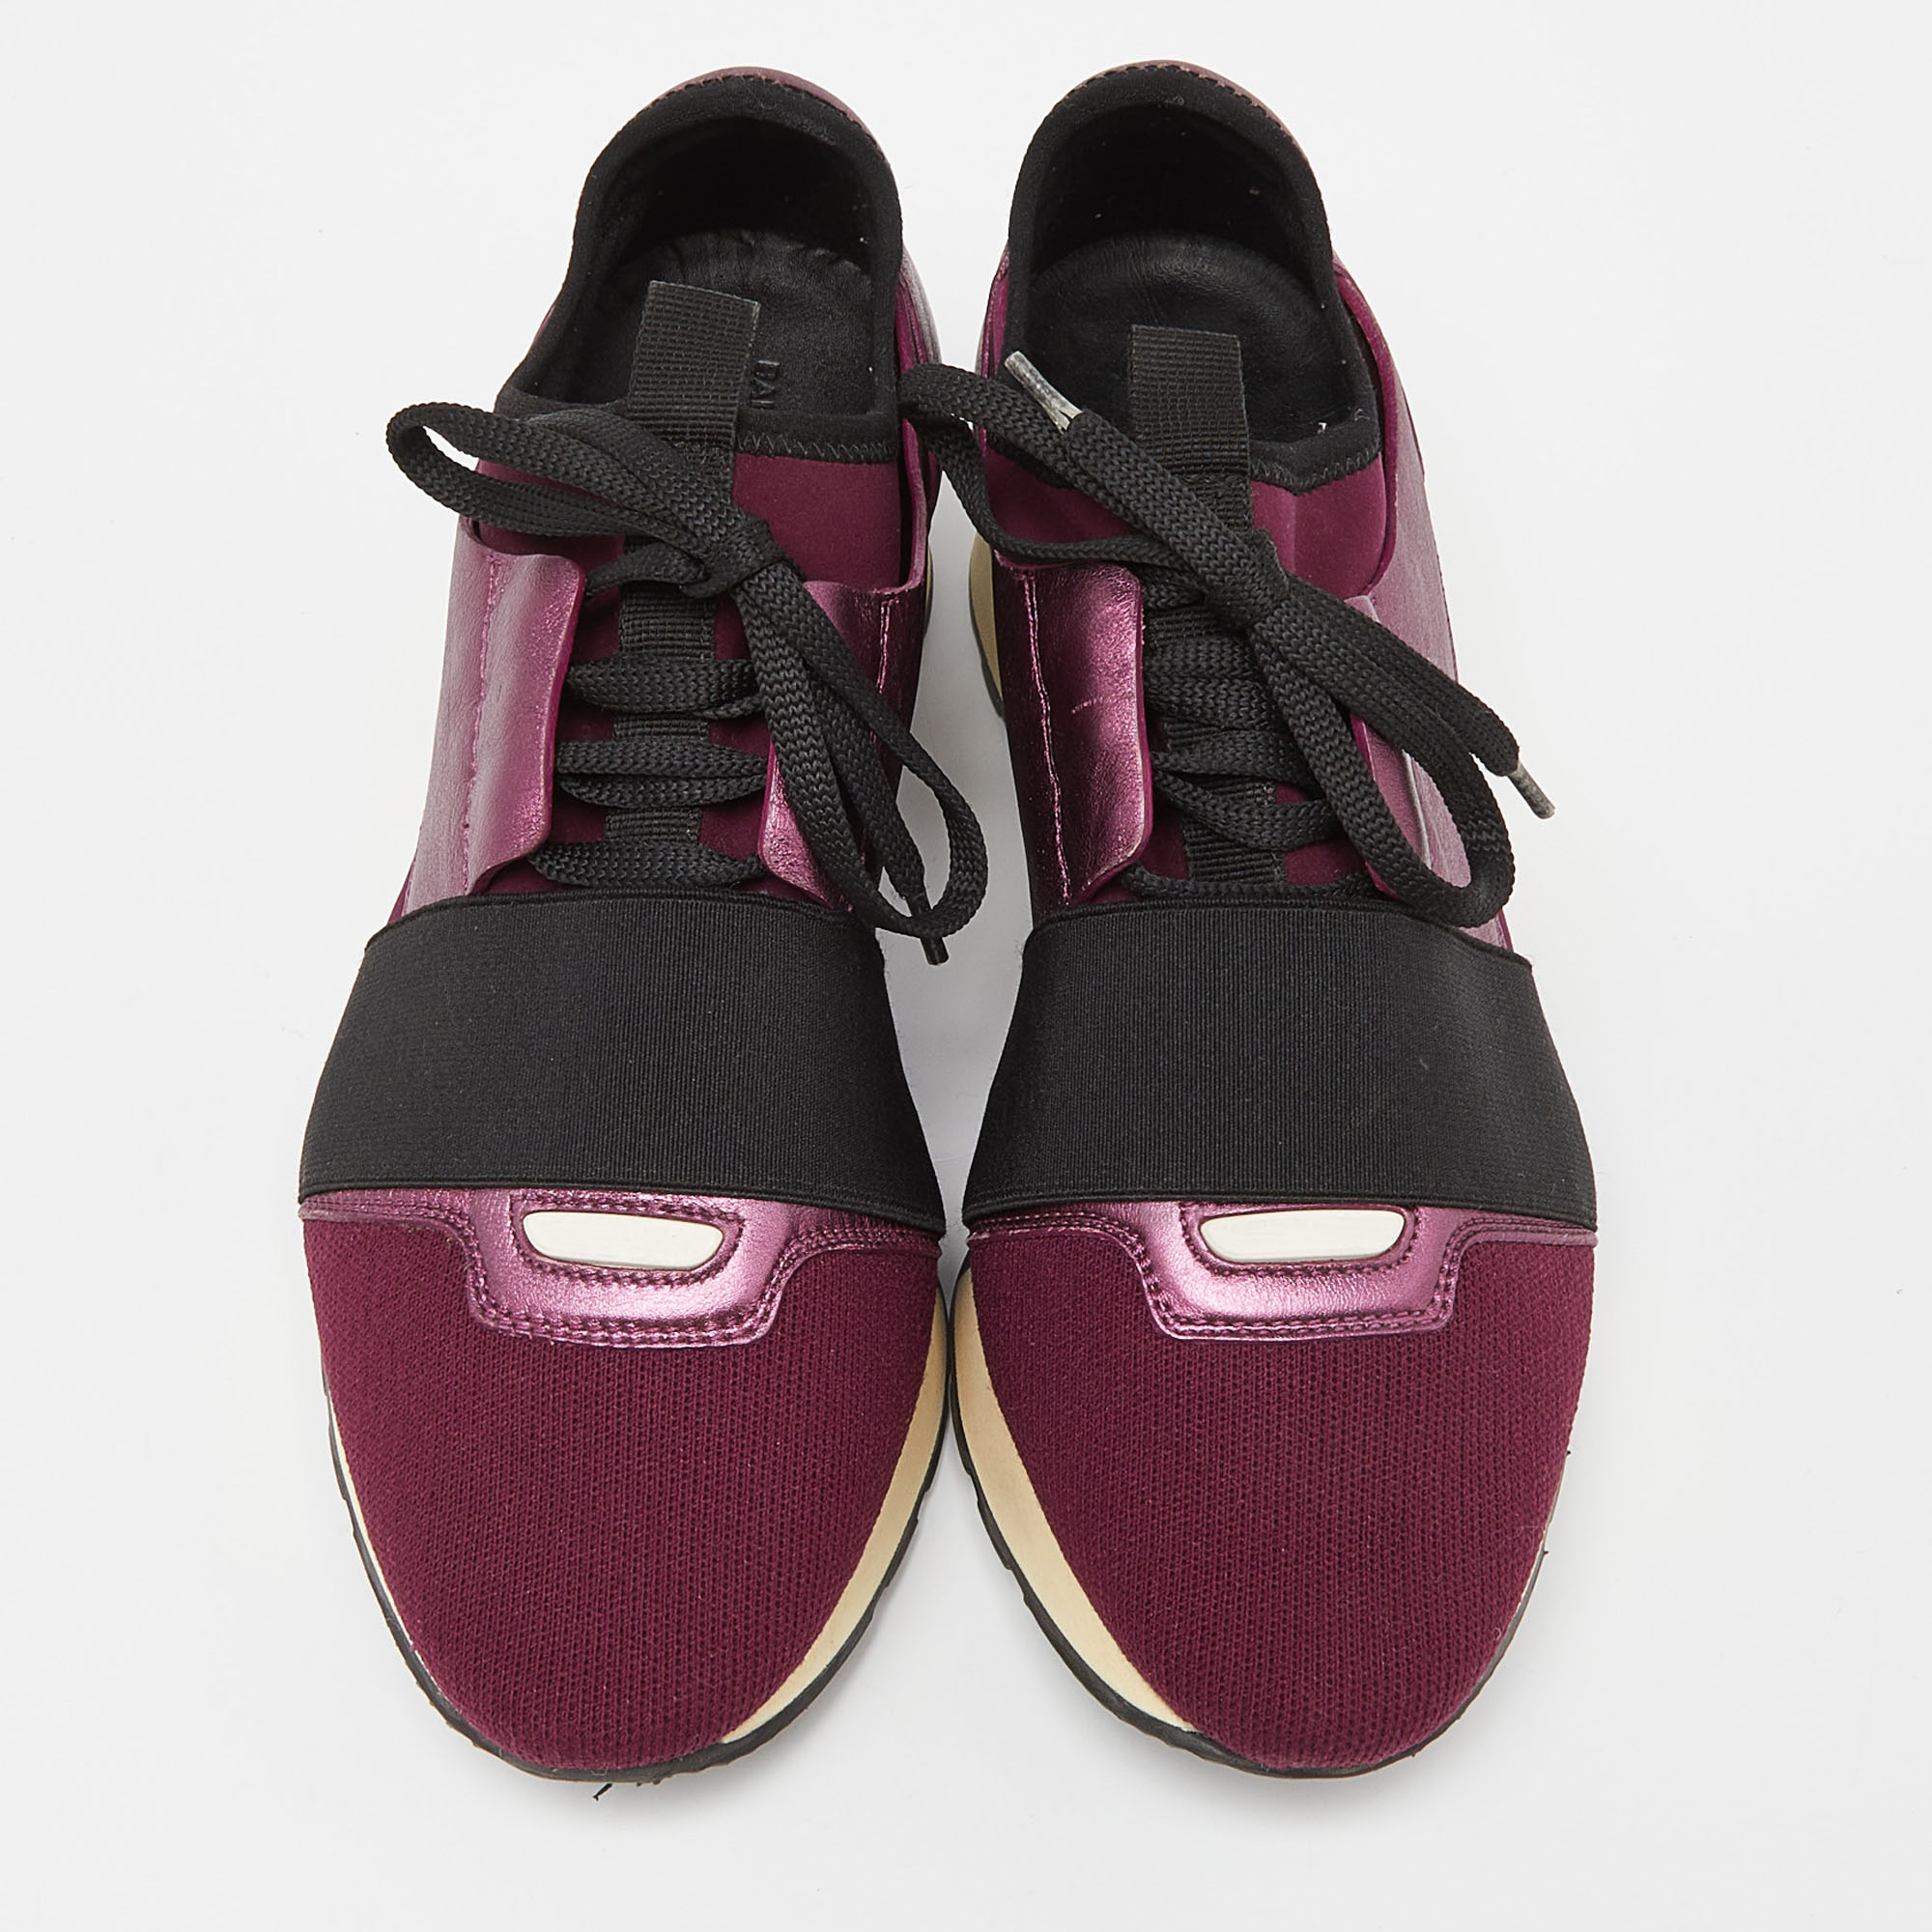 Balenciaga Purple Leather And Neoprene Race Runner Sneakers Size 38